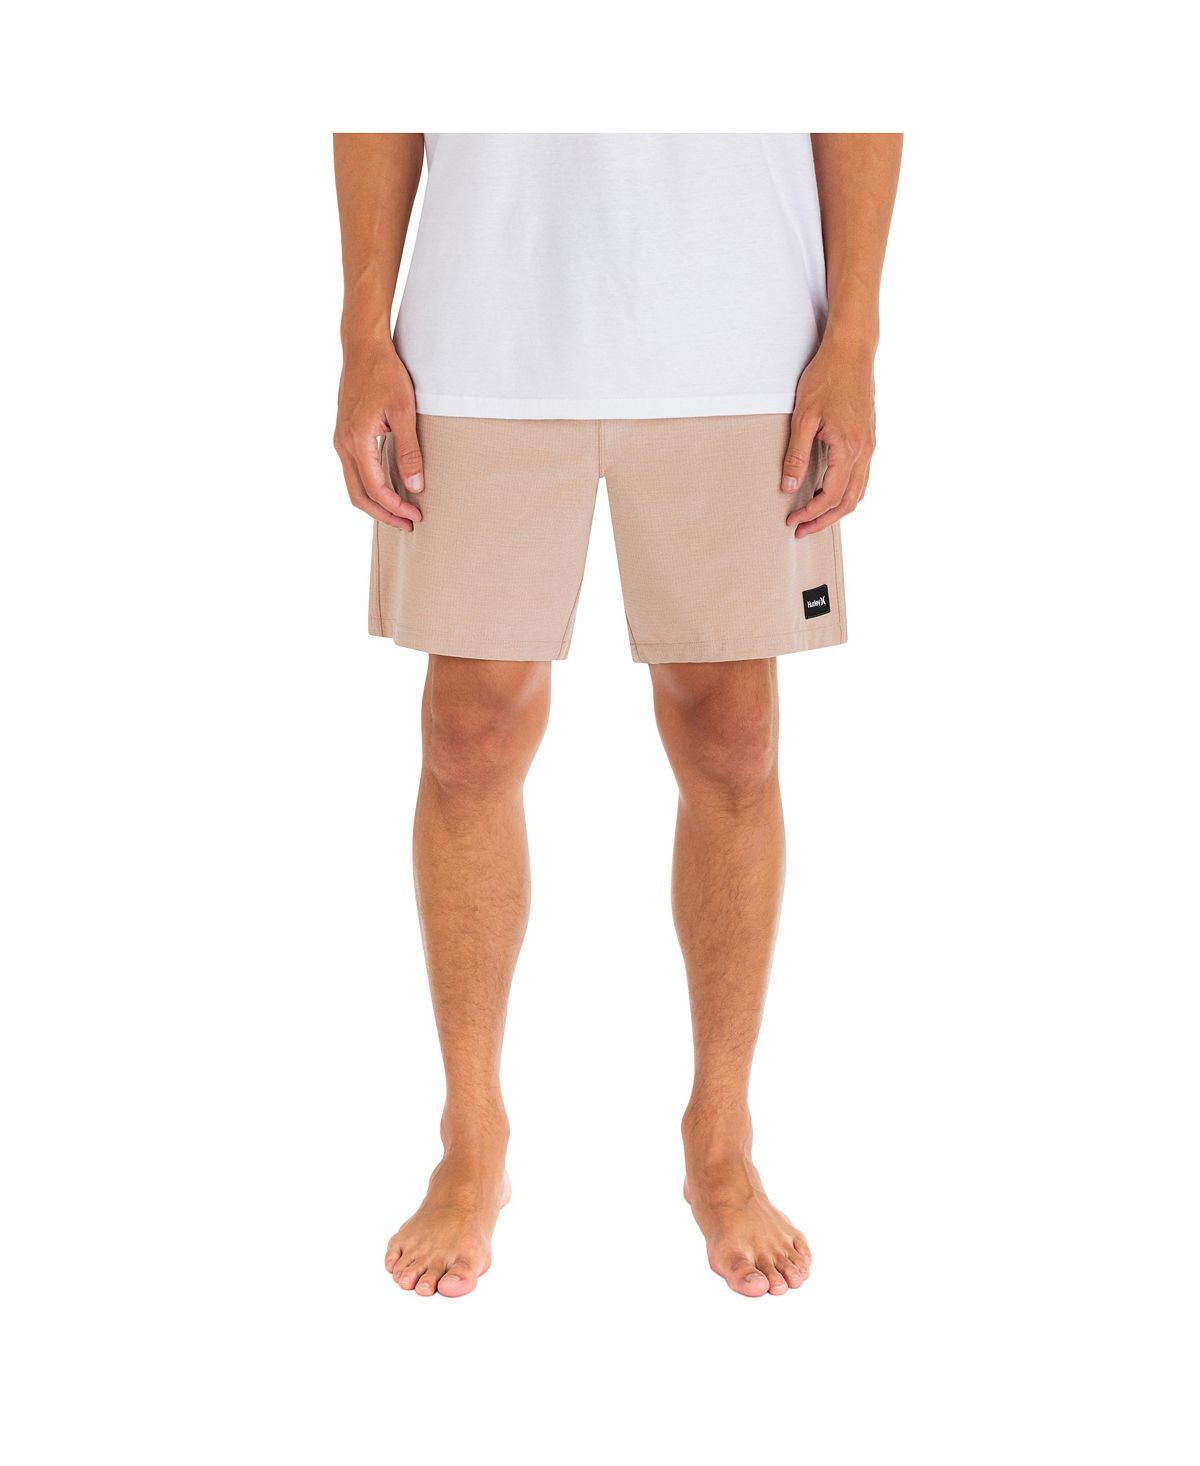 Мужские прогулочные шорты Phantom Zuma II Volley со шнурком, 18 дюймов Hurley мужские шорты phantom zuma ii volley с эластичным поясом hurley